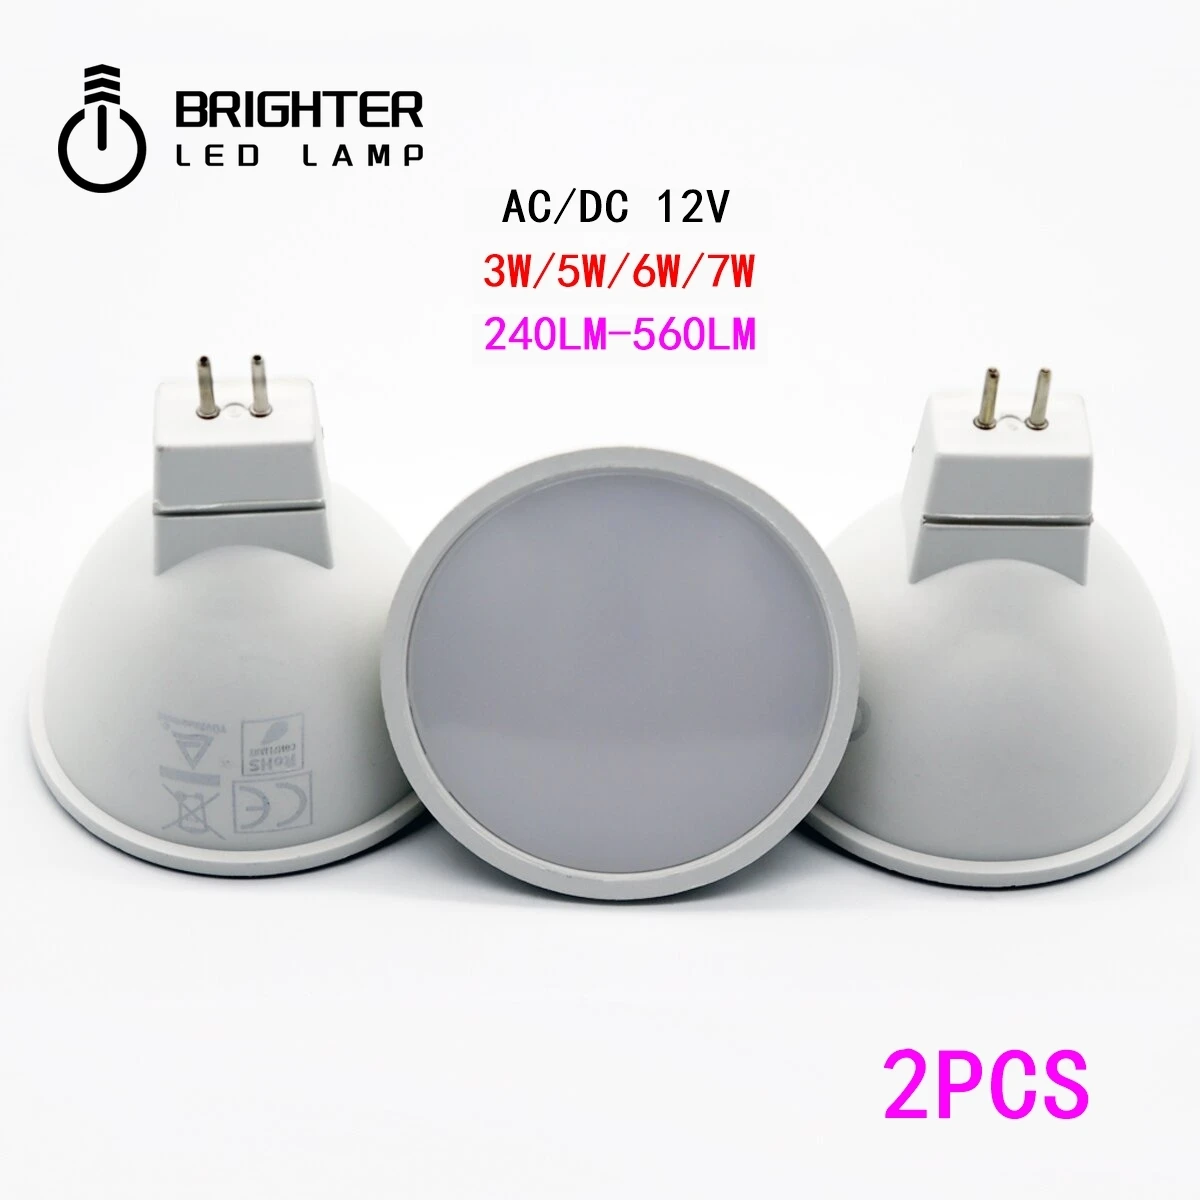 

2PCS LED Spotlight MR16 GU5.3 low pressure AC/DC 12V 3W 5W 6W 7W Light Angle 120 degrees Warm White Day Light LED Light Lamp